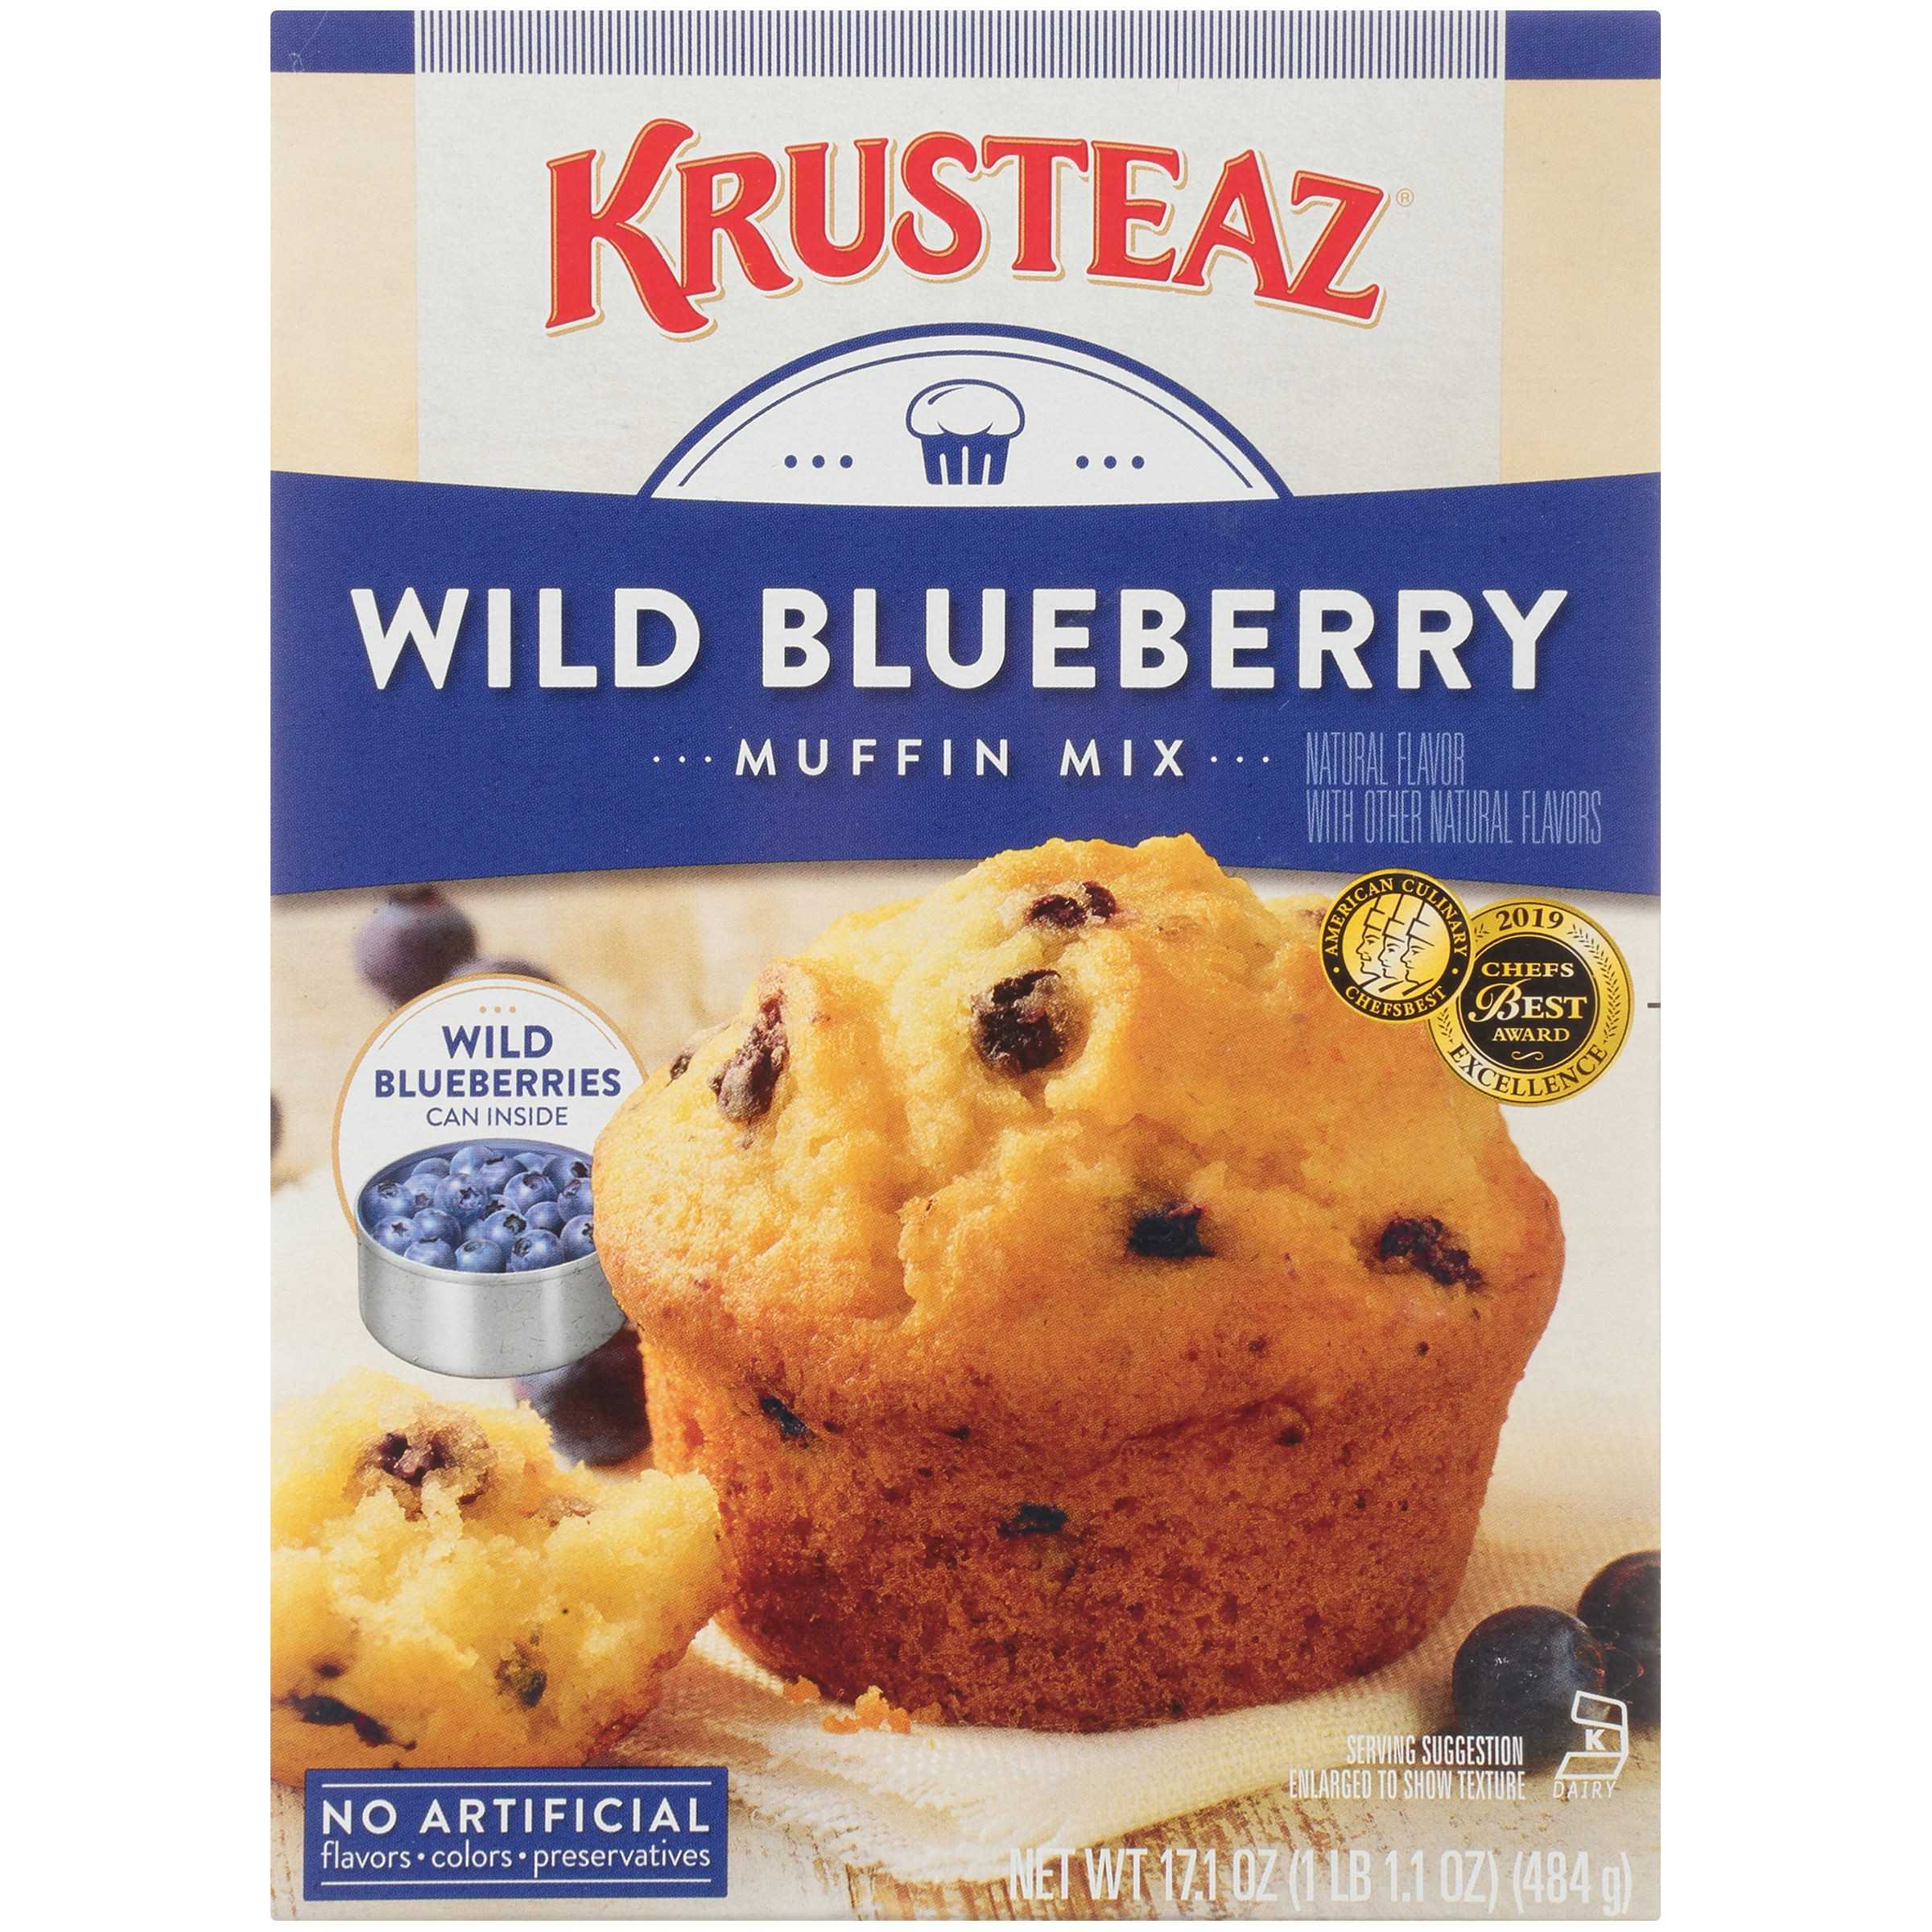 KrusteazÂ® Wild Blueberry Muffin Mix 17.1 oz. Box